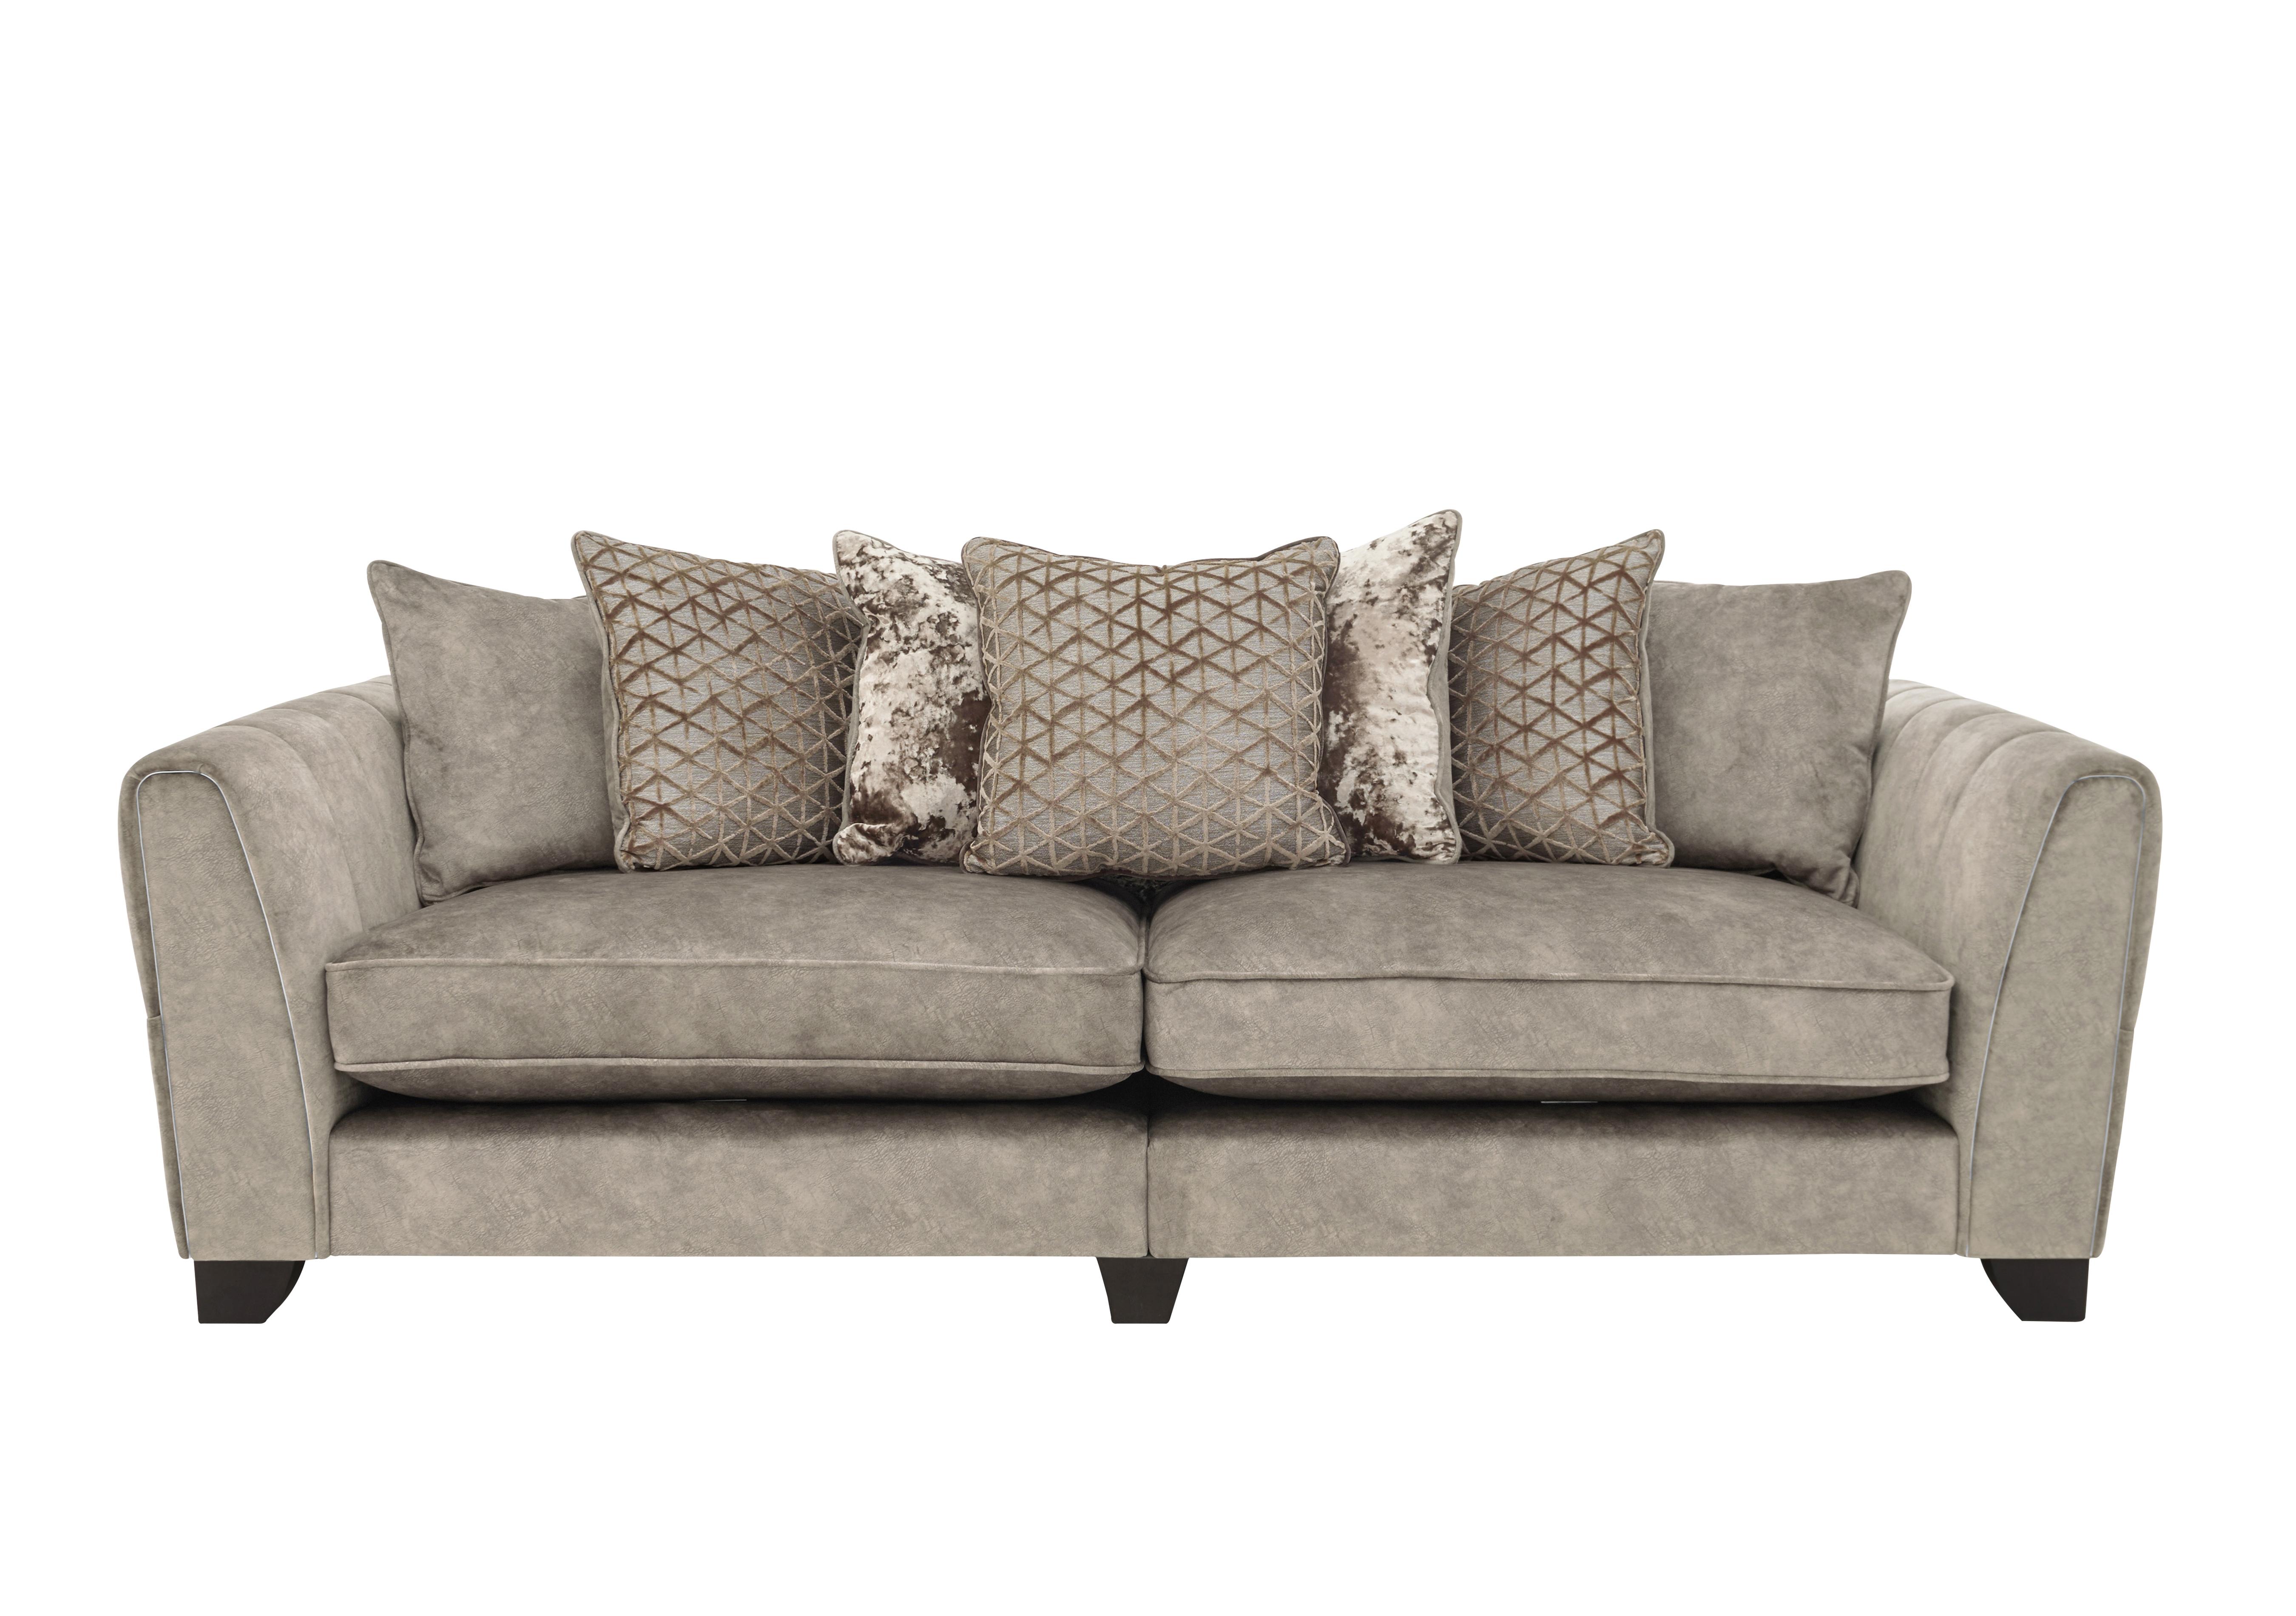 Ariana 4 Seater Fabric Pillow Back Split Frame Sofa in Dapple Oyster Chrome Insert on Furniture Village